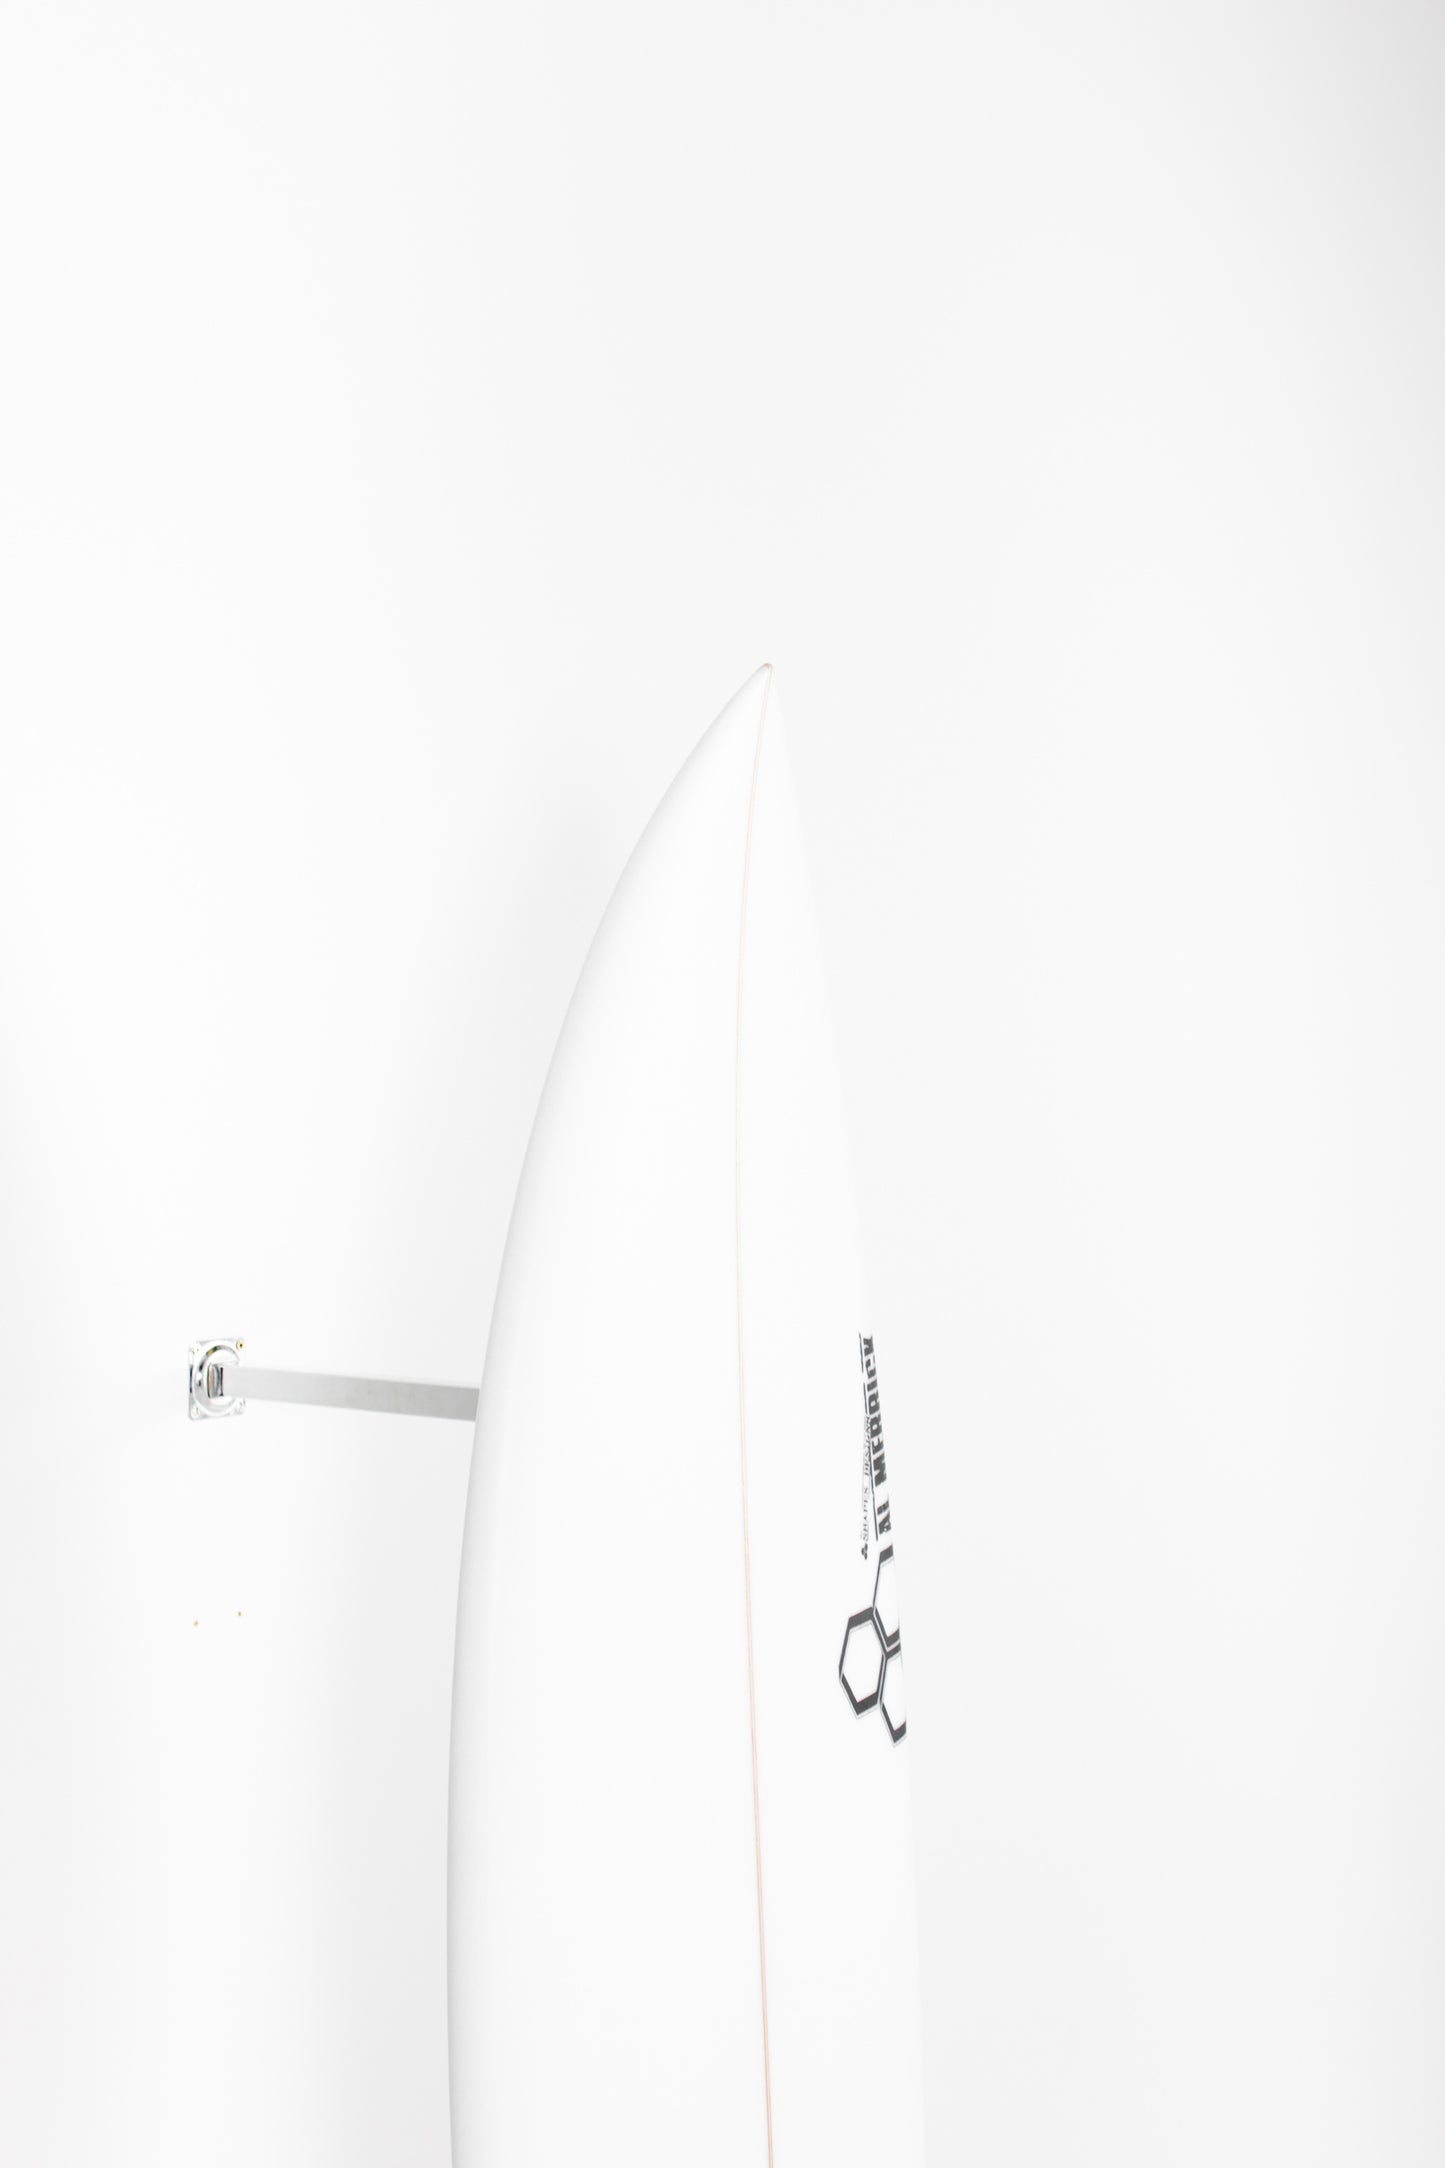 
                  
                    Pukas Surf Shop - Channel Islands - NECKBEARD 2 by Al Merrick - 5'9" x 19 5/8 x 2 1/2 - 31,2L - CI20244
                  
                